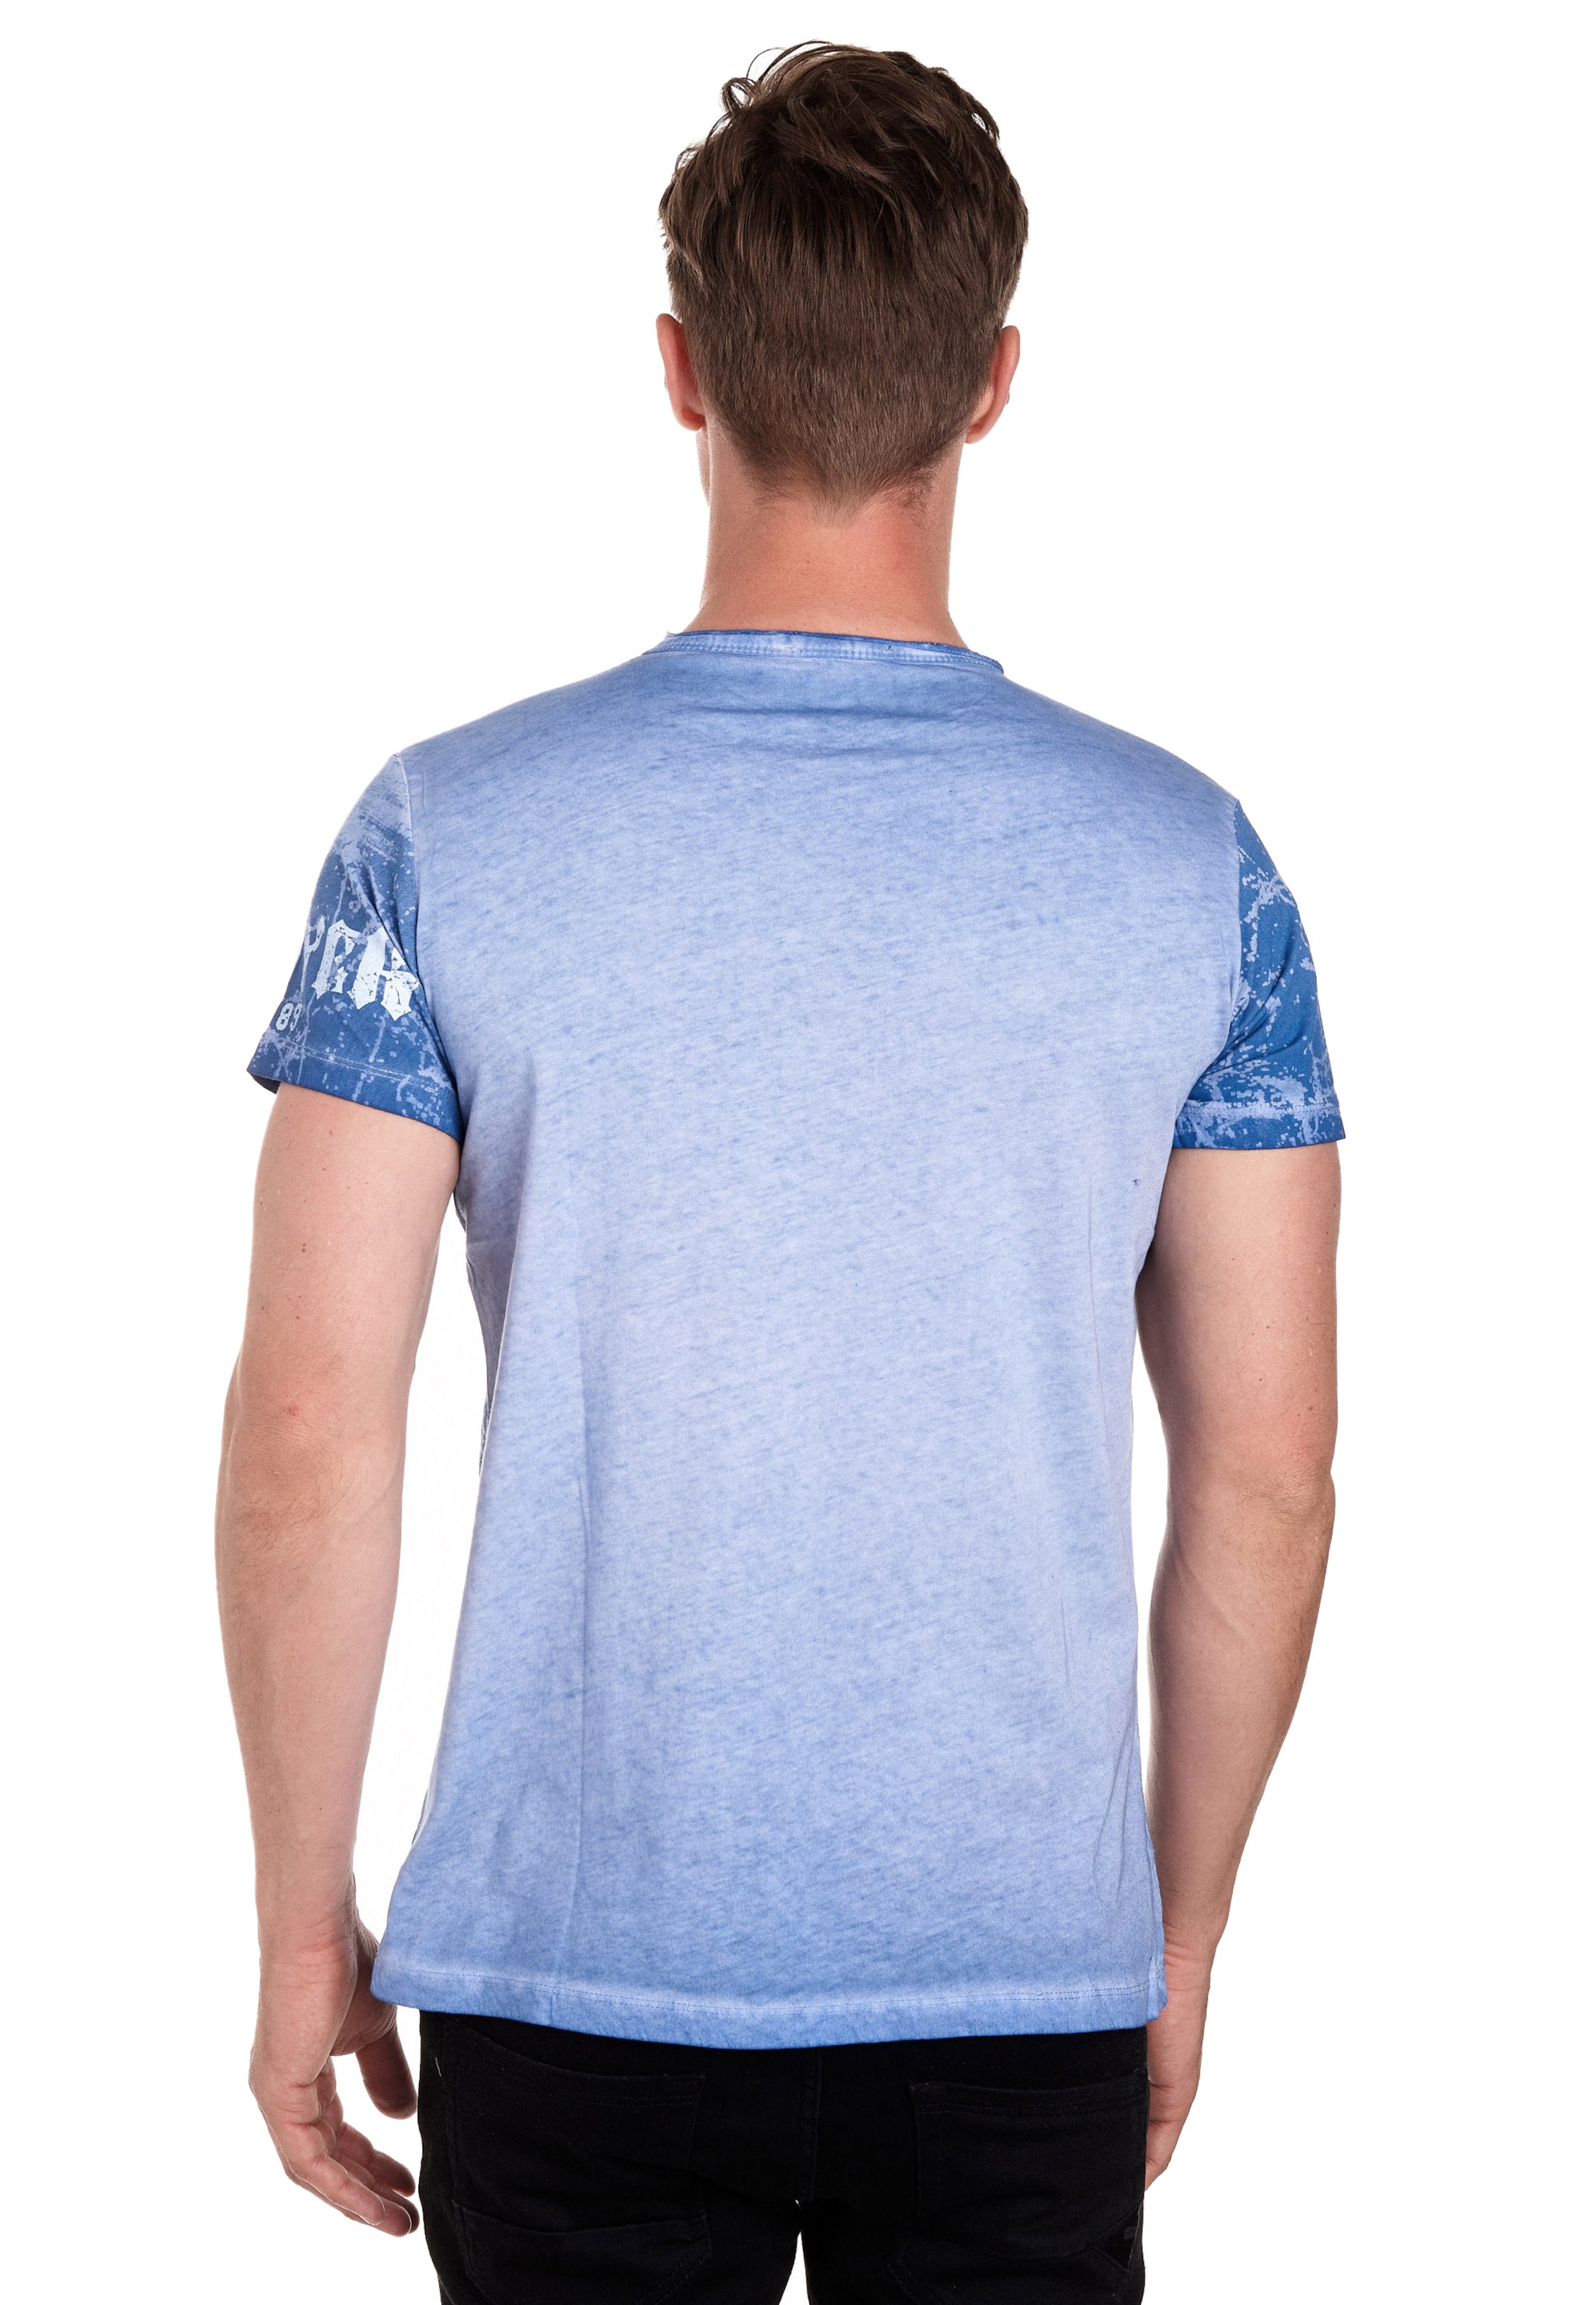 Männer Shirts Rusty Neal T-Shirt in Blau, Dunkelblau - VN57490